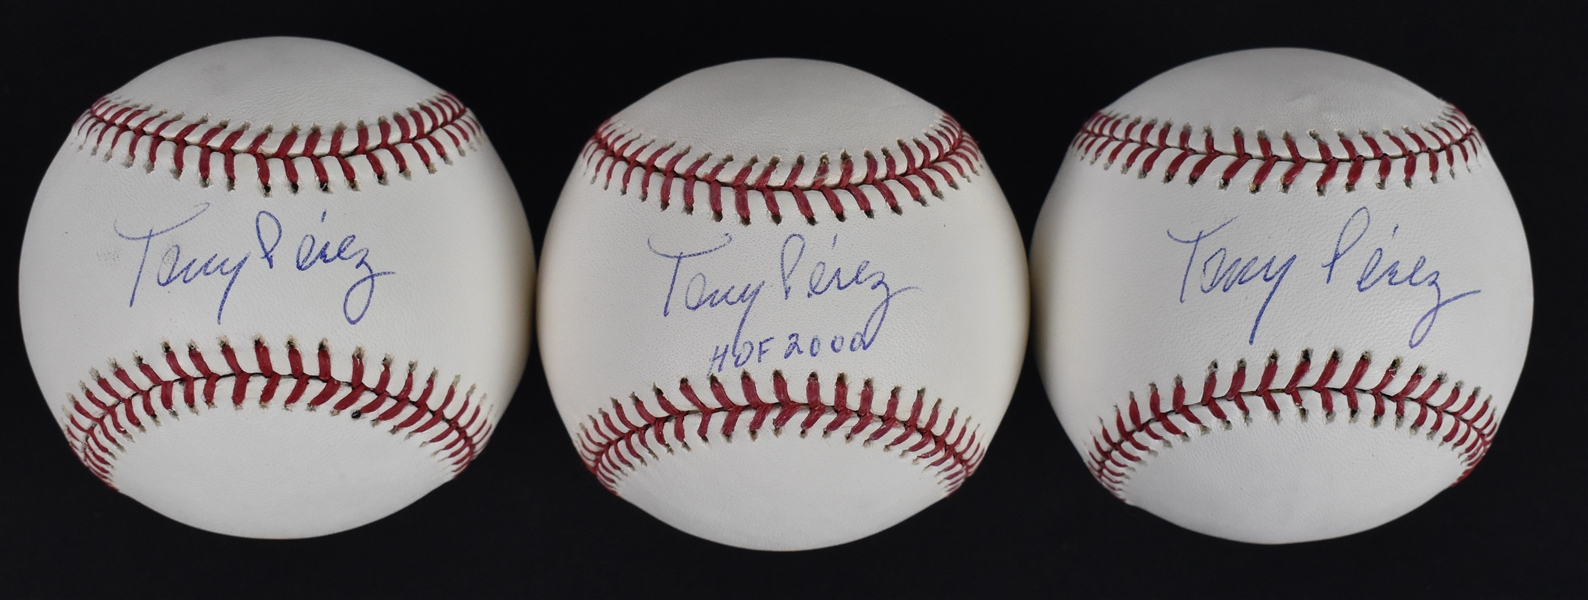 Collection of 3 Autographed Baseballs w/Tony Perez 